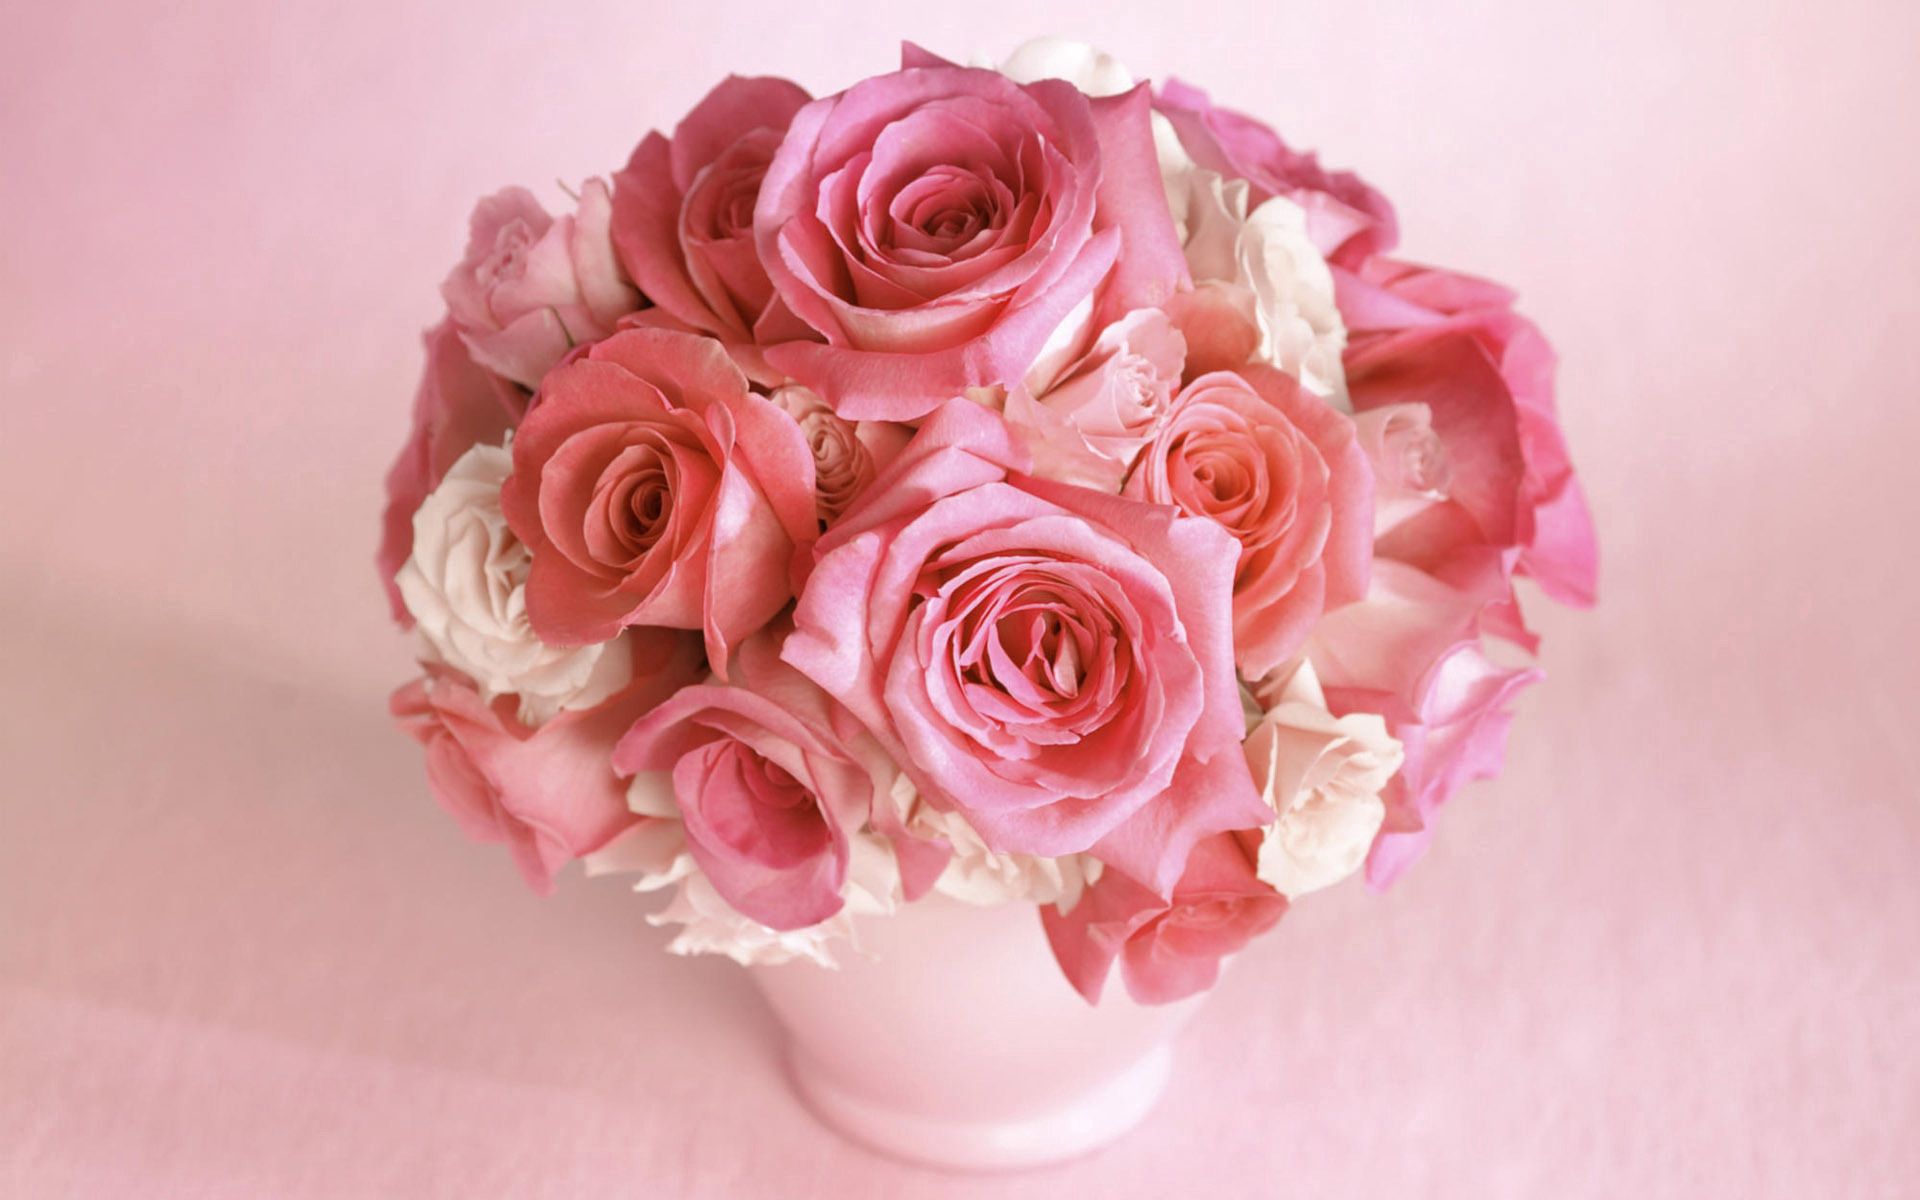 roses, flowers, bouquet, vase Image for desktop